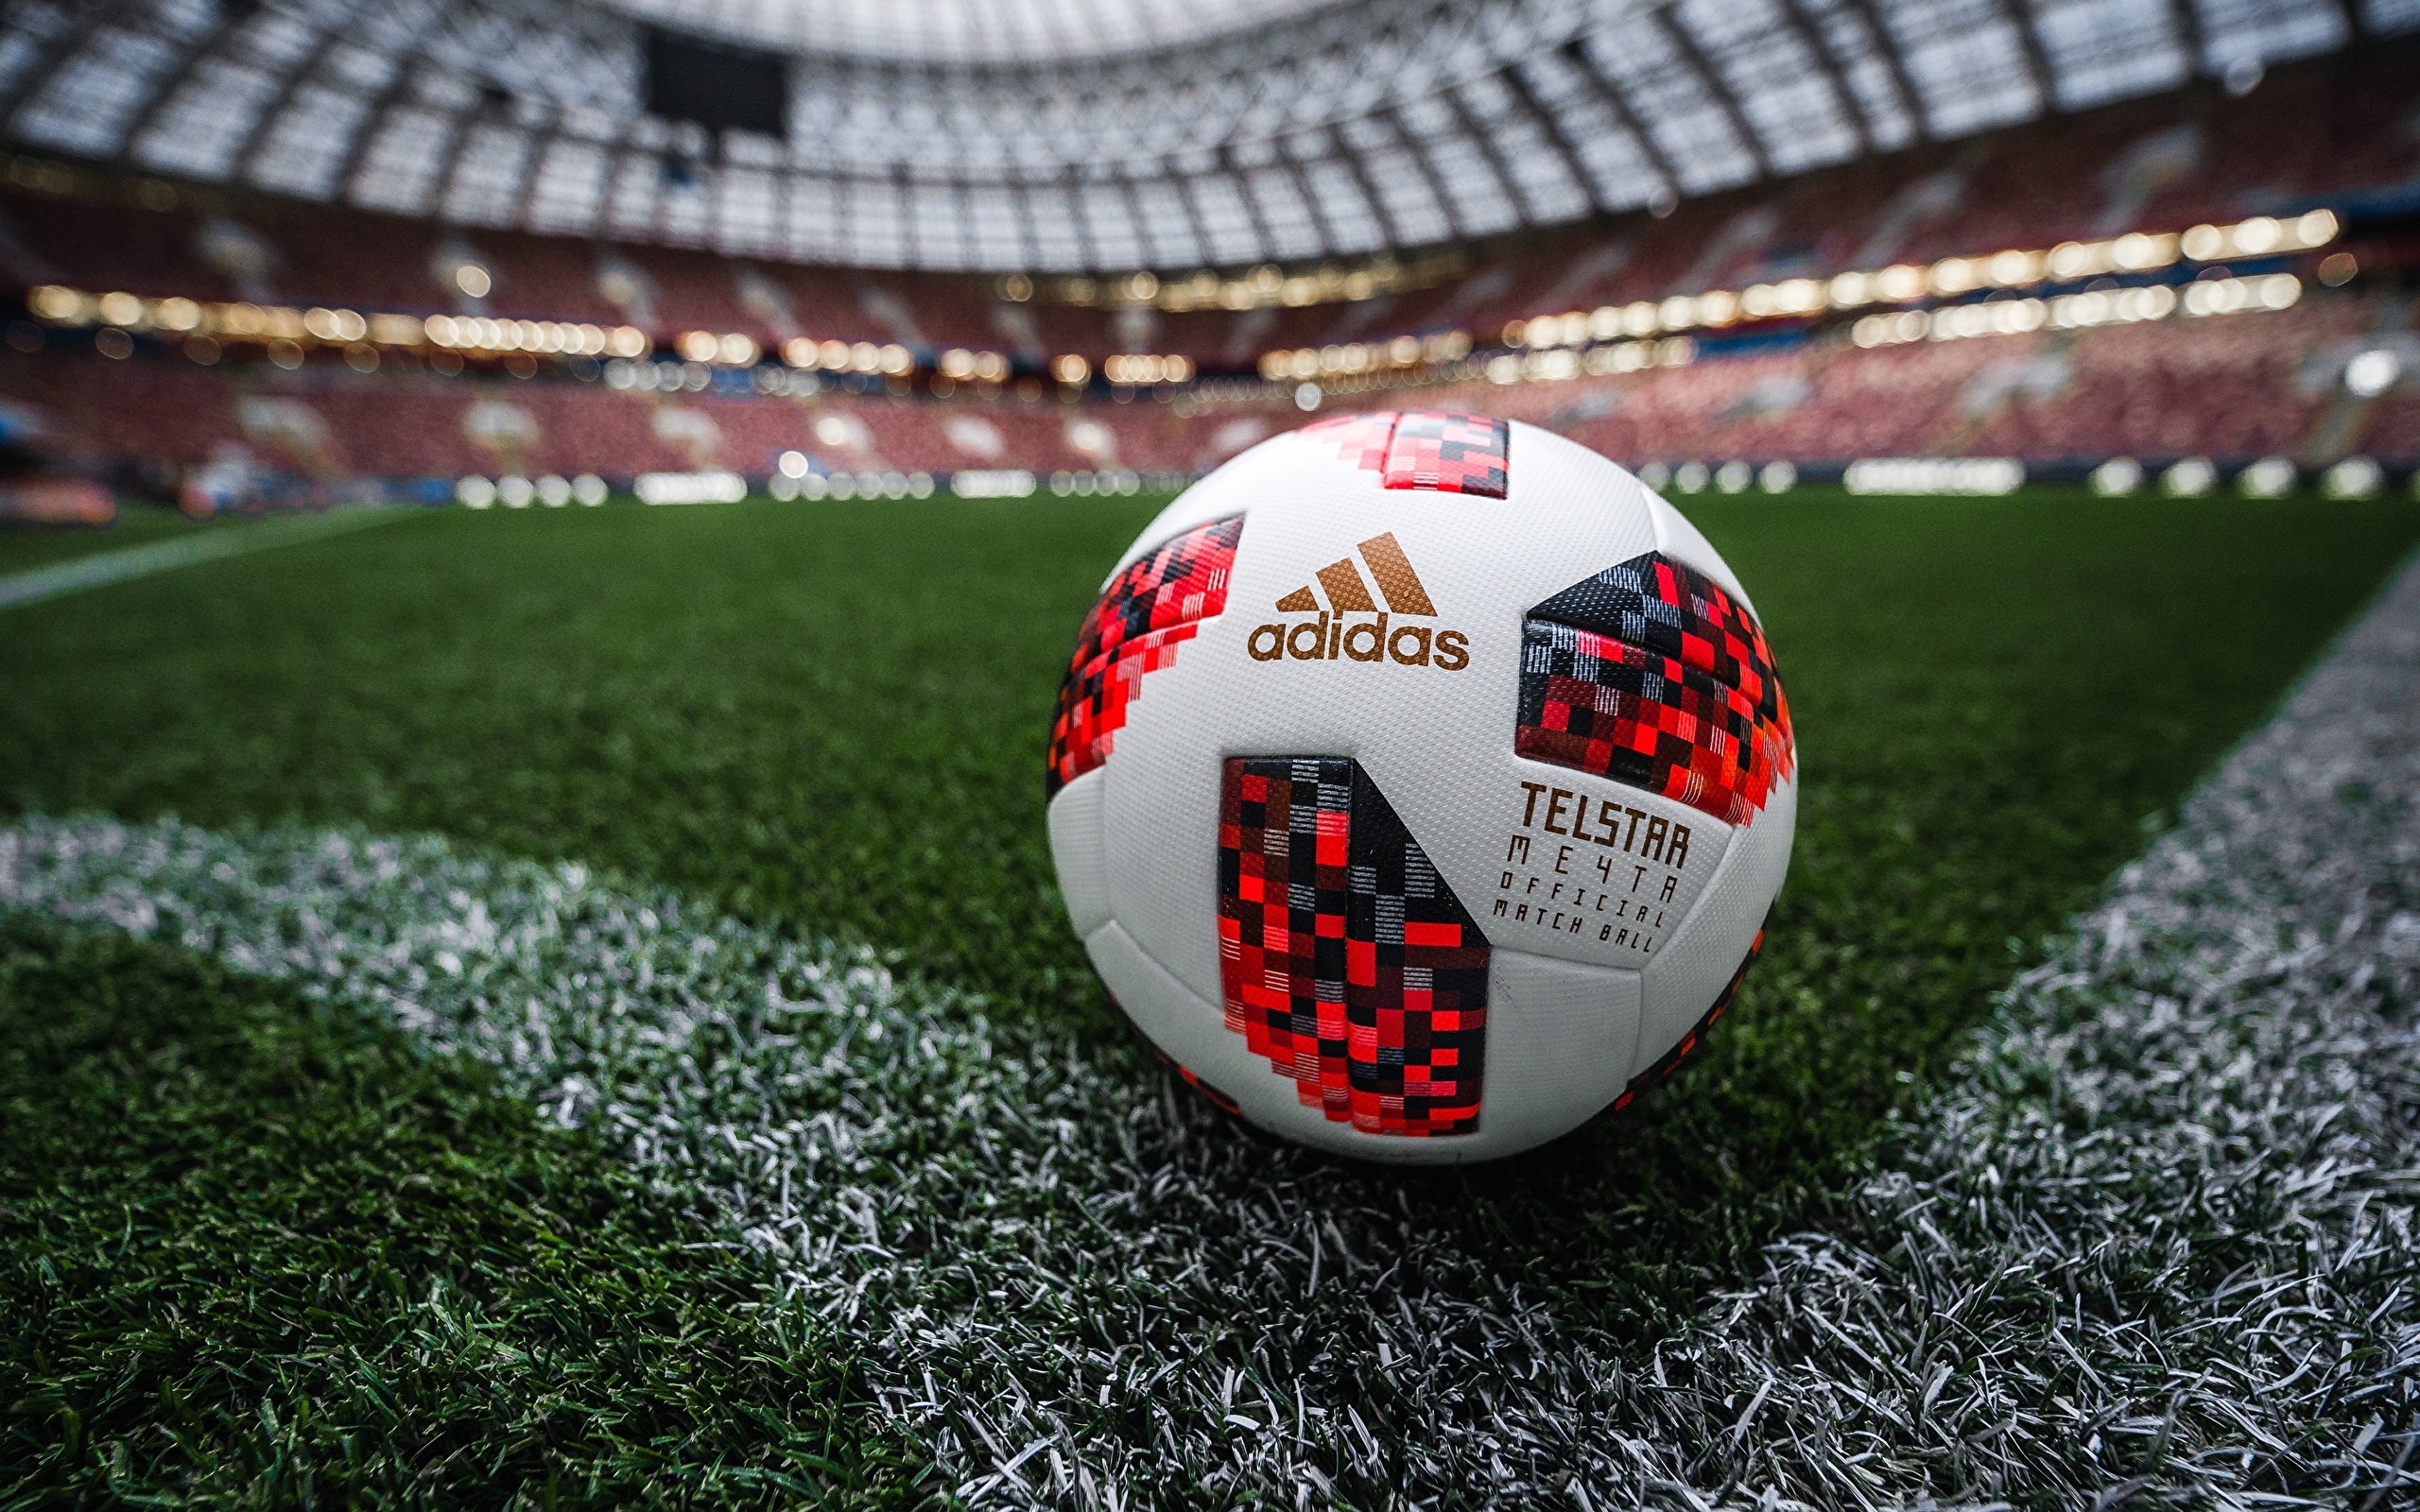 Image Russia Fifa World Cup Adidas Telstar Sport